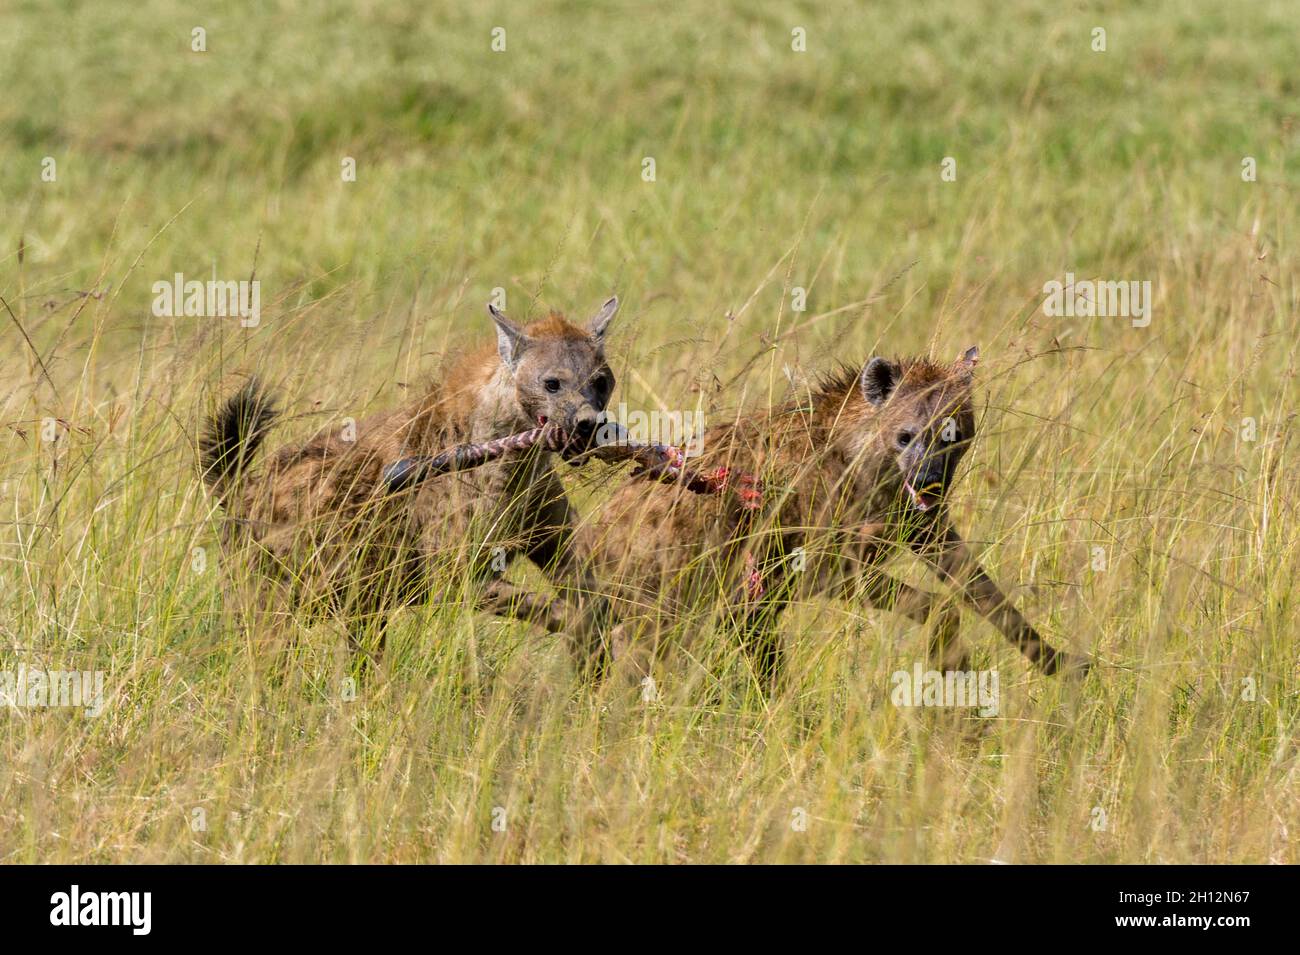 Two spotted hyenas, Crocuta crocuta, scavenging a zebra leg from a lion pride. Stock Photo